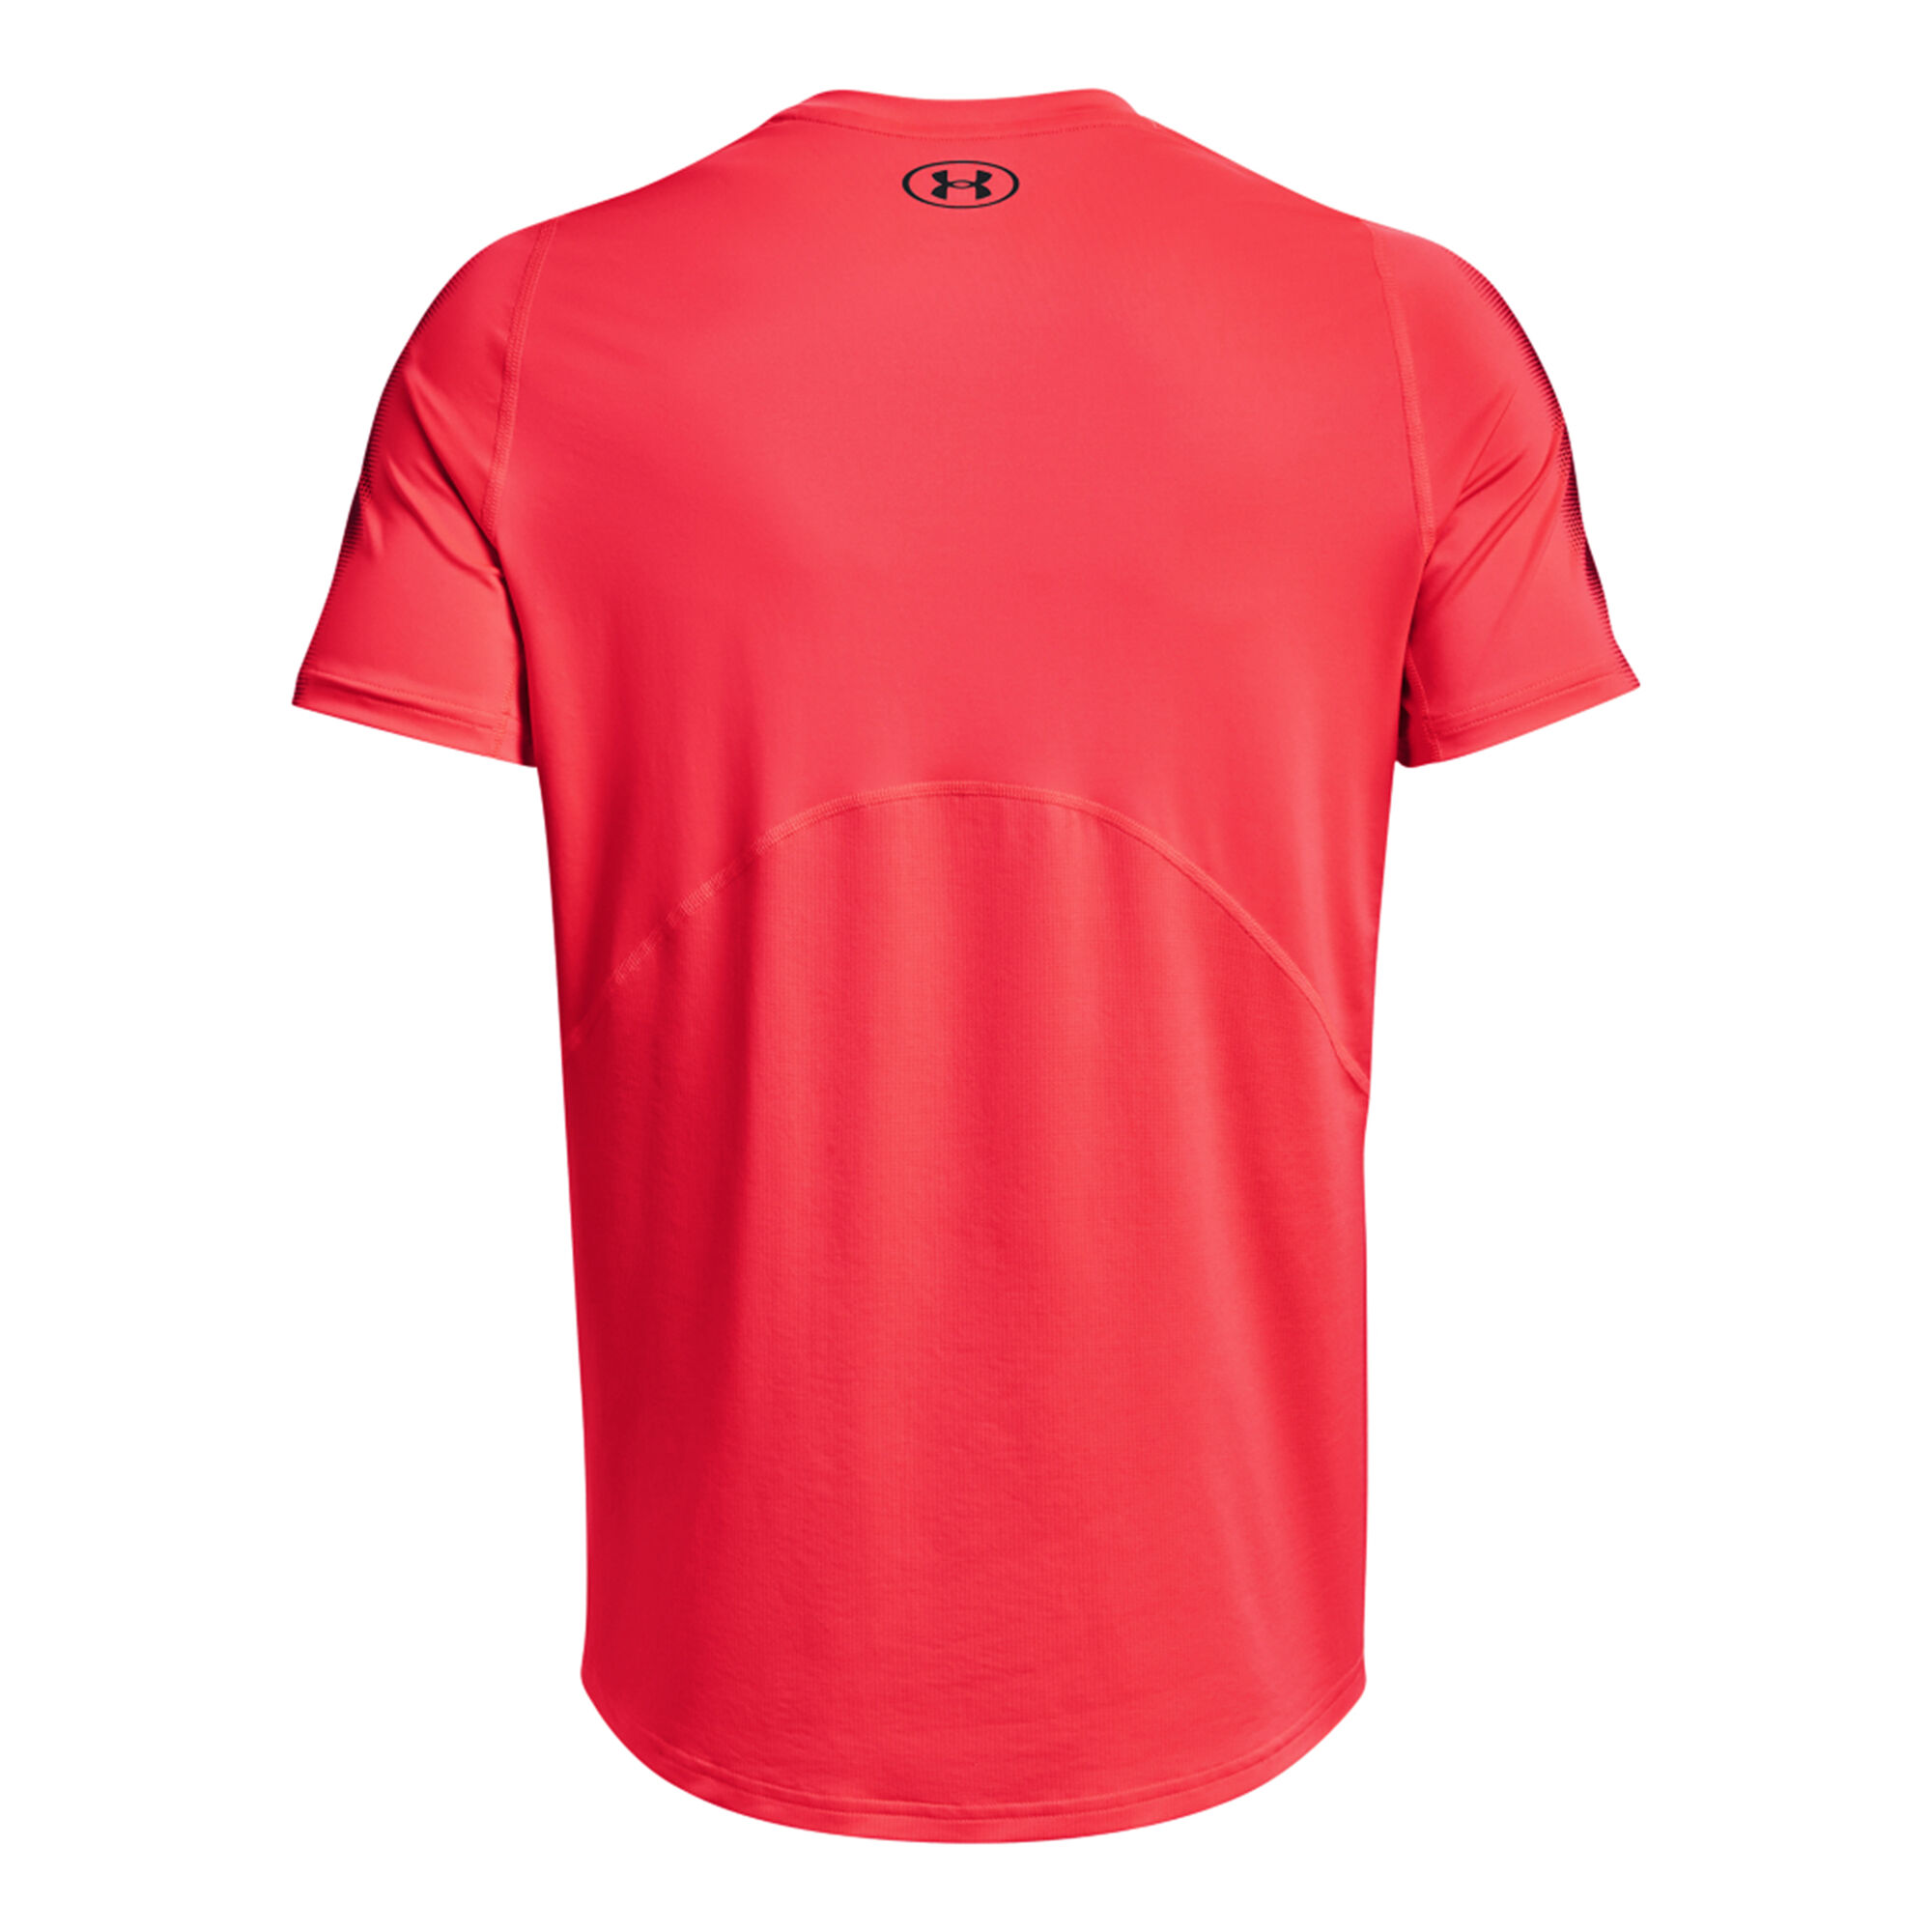 Buy Under Armour Heatgear Nov Fitted T-Shirt Men Coral, Black online